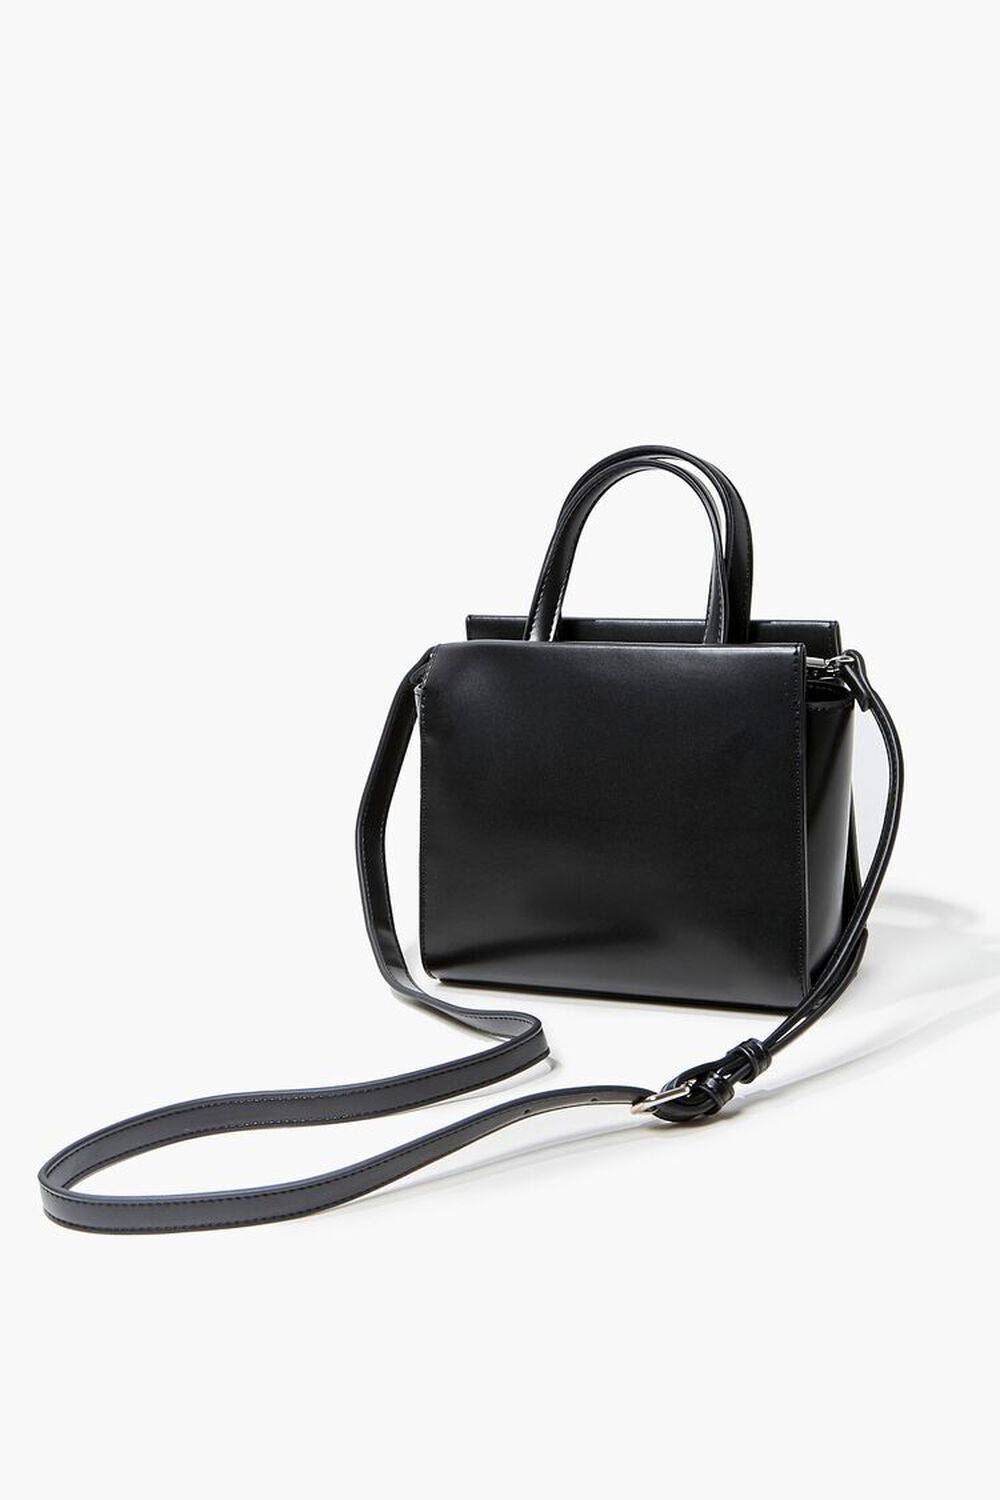 BLACK Faux Leather Crossbody Bag, image 1